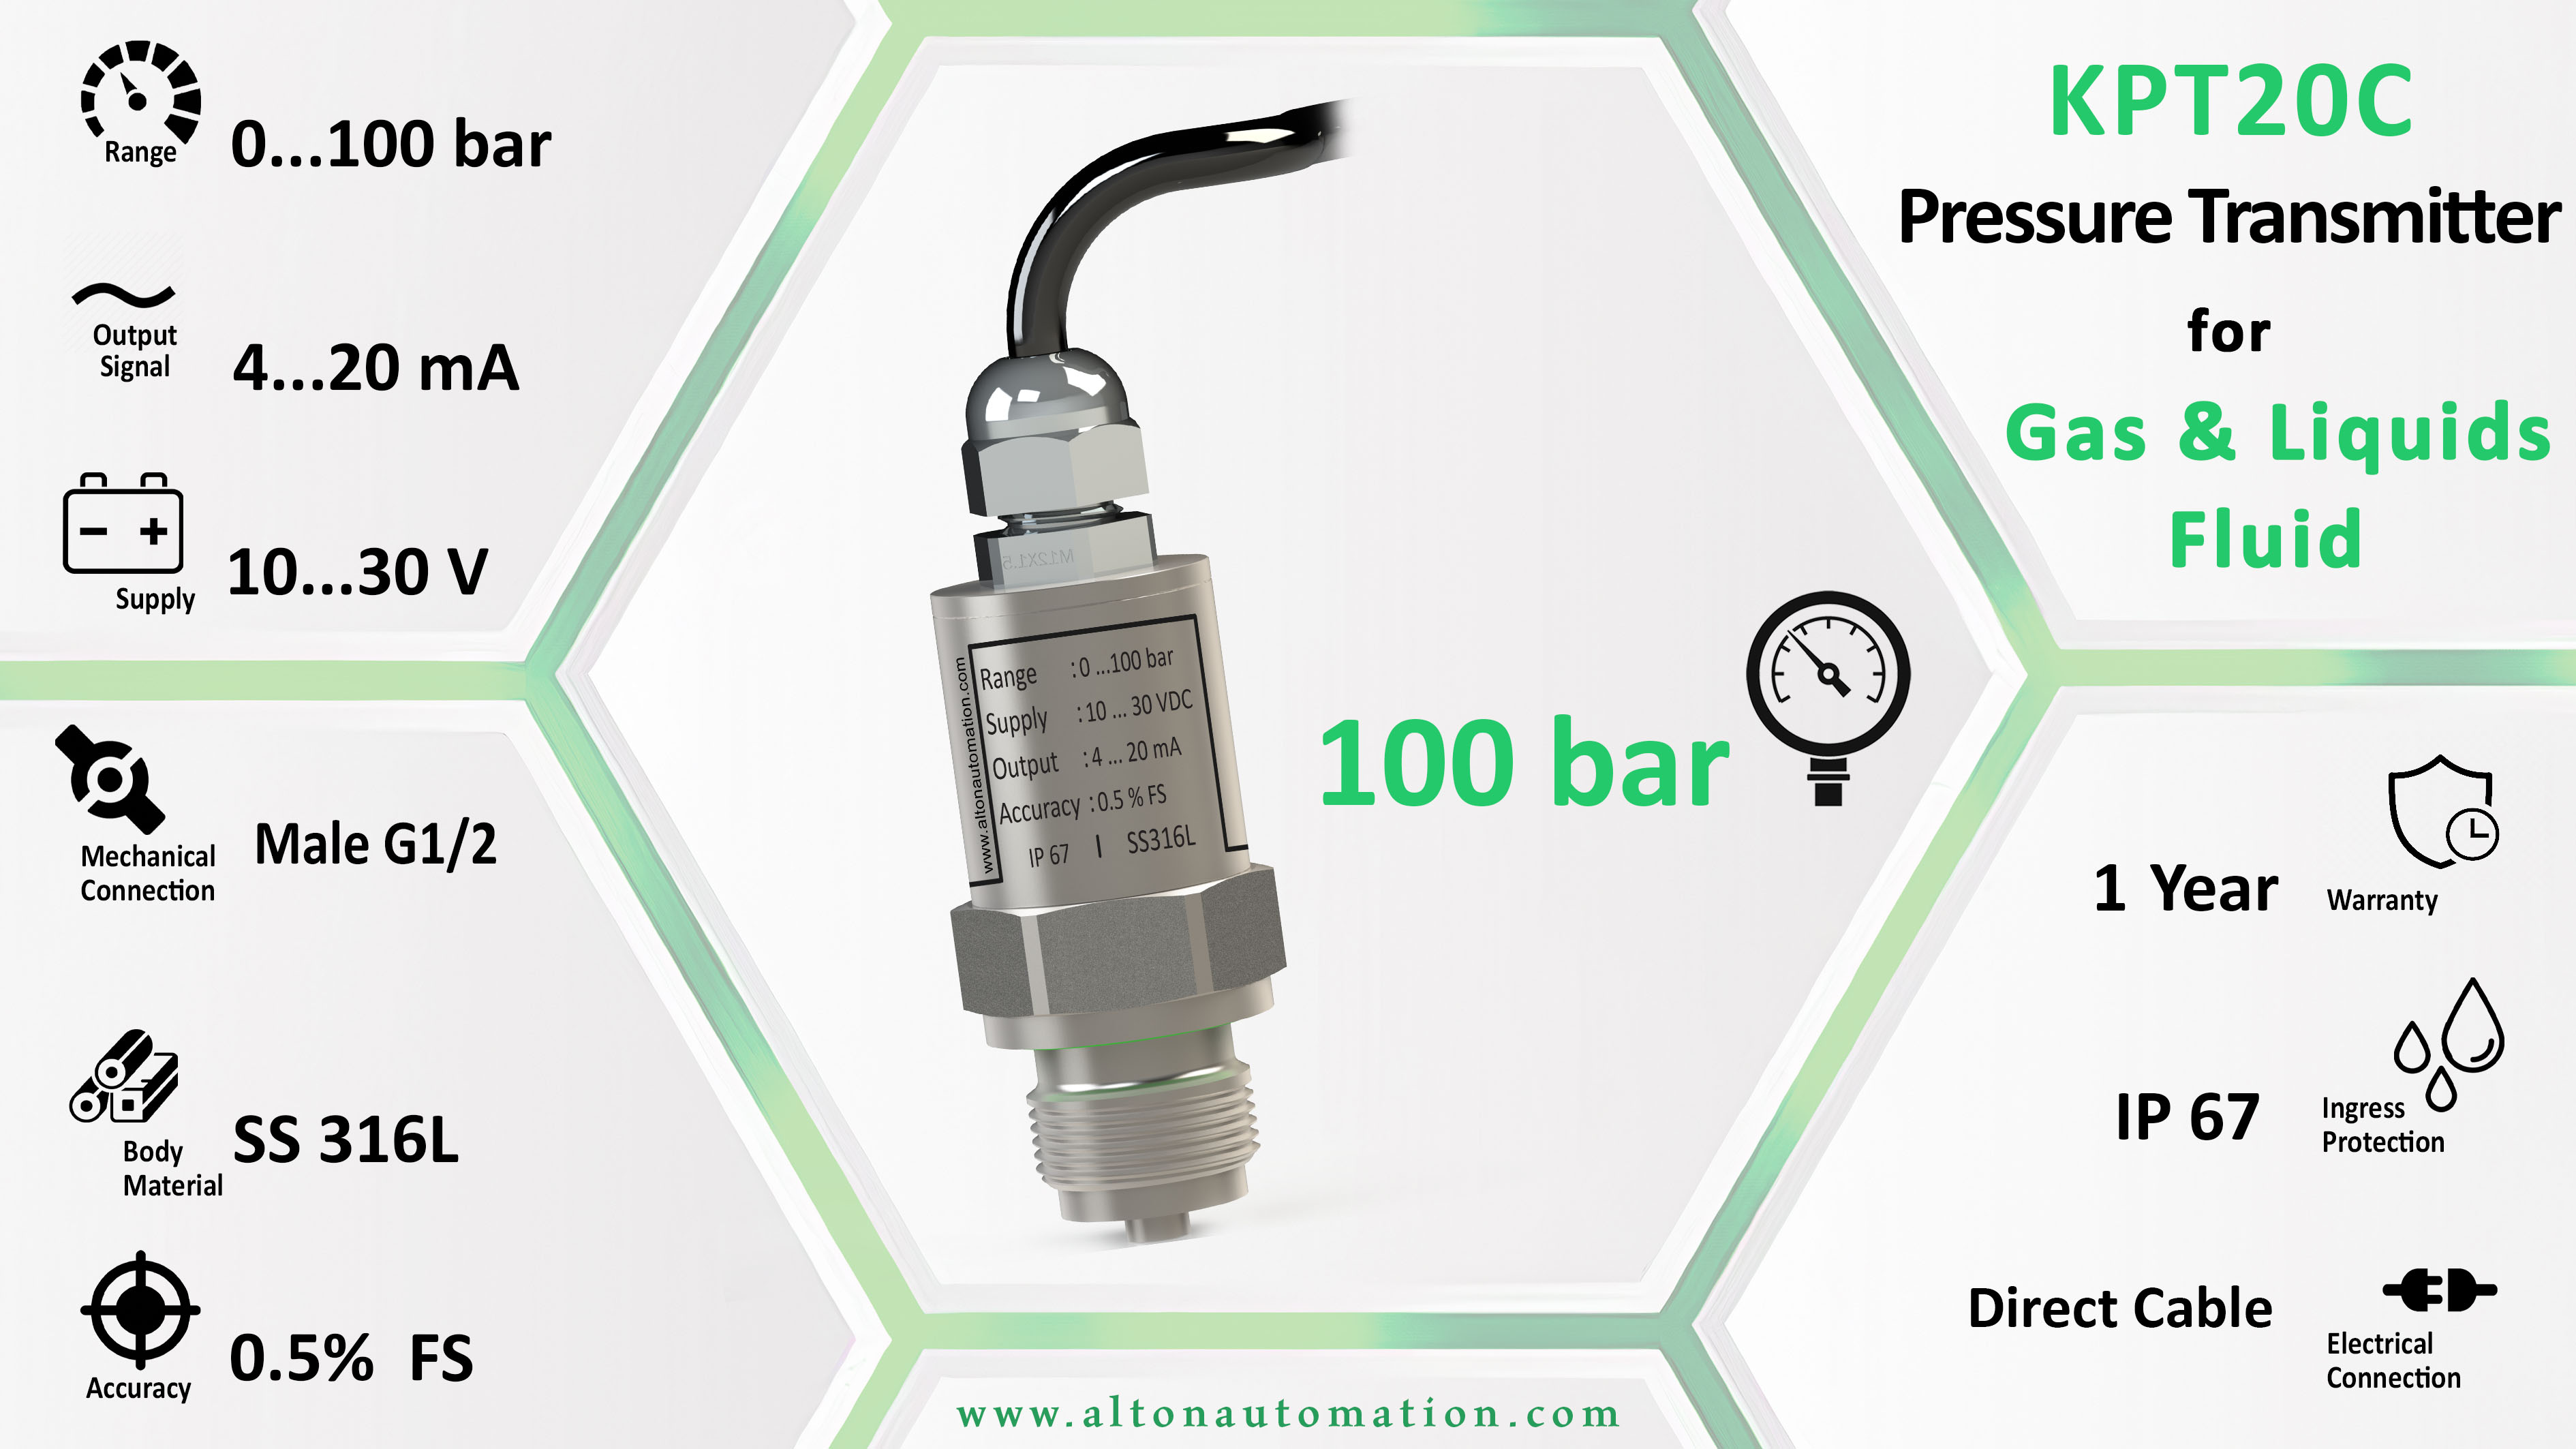 Pressure Transmitter for Gas & Liquids Fluid_KPT20C-100-C1-MG2_image_2